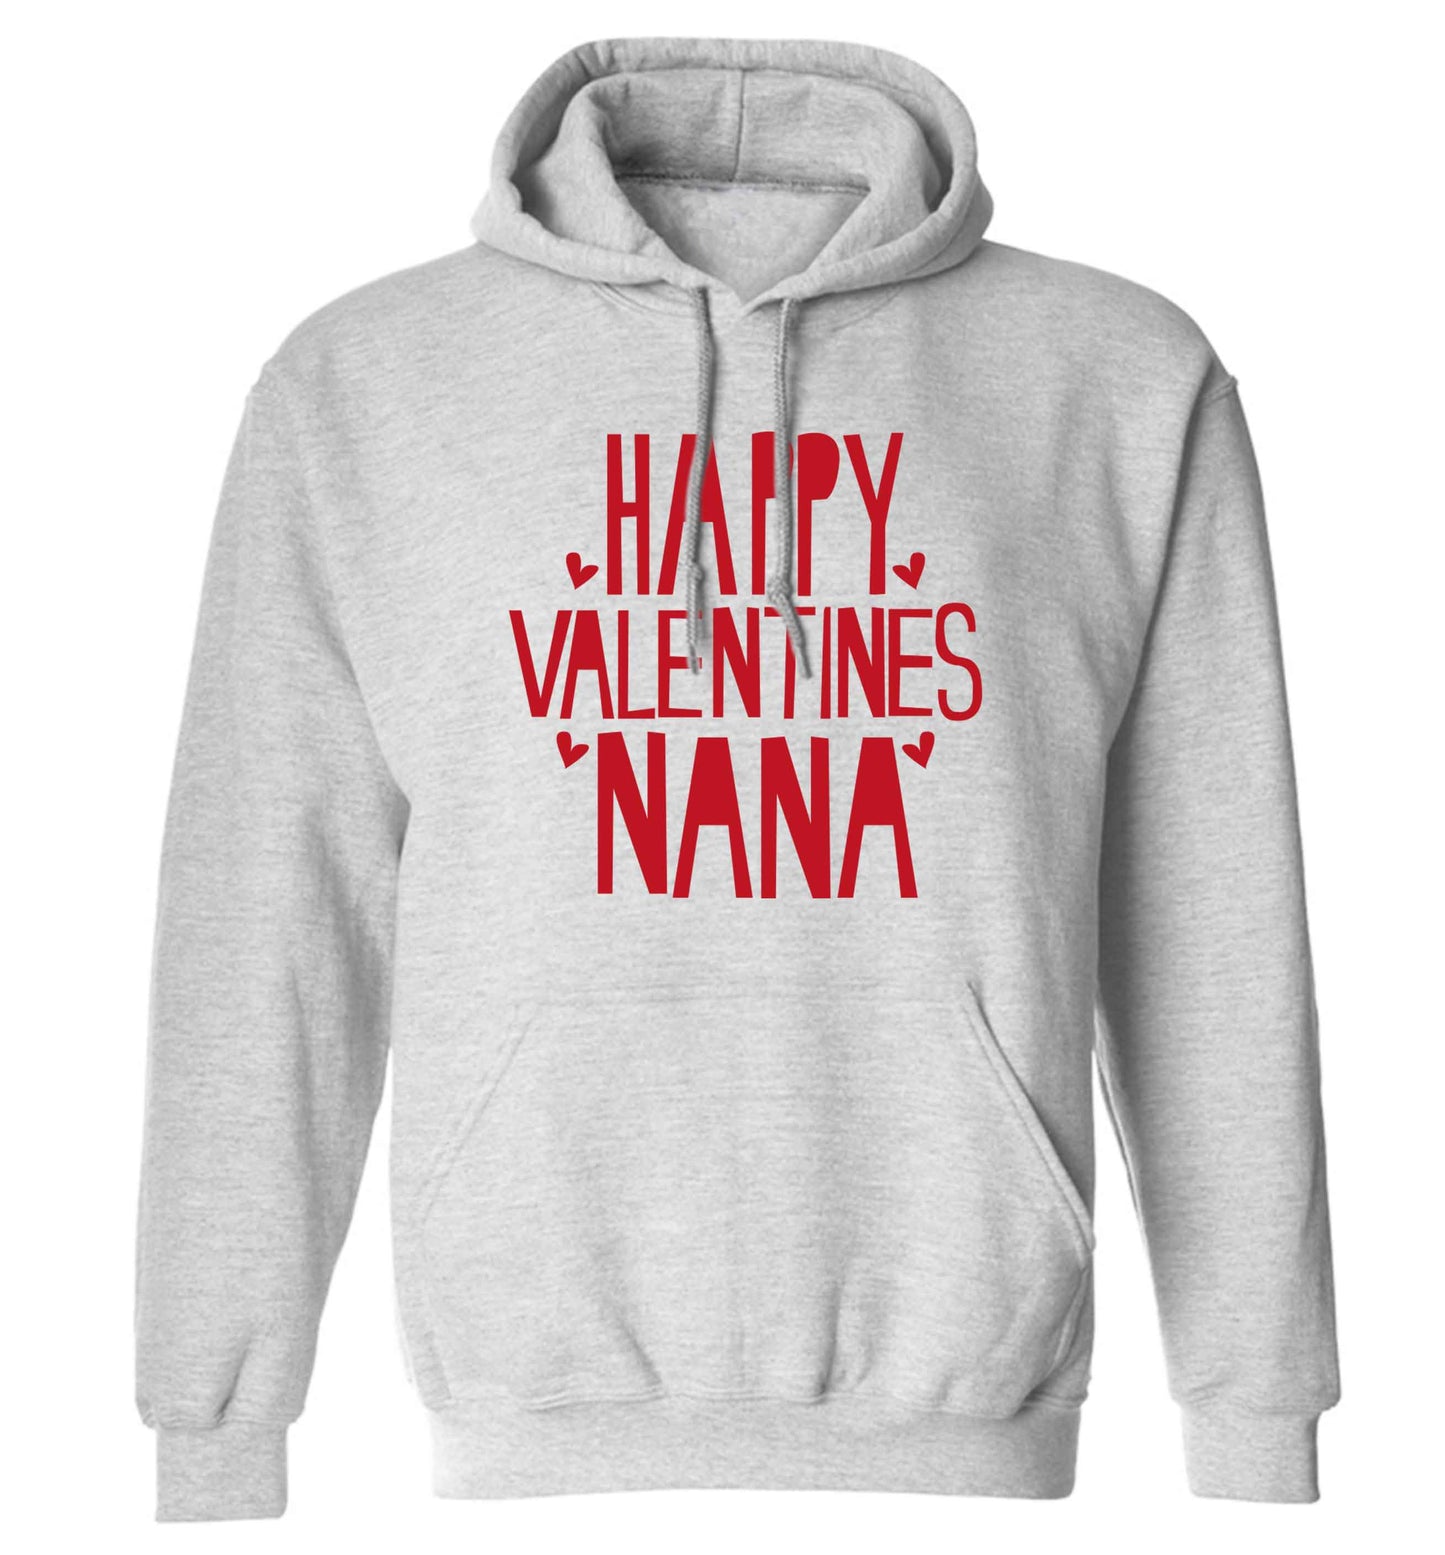 Happy valentines nana adults unisex grey hoodie 2XL